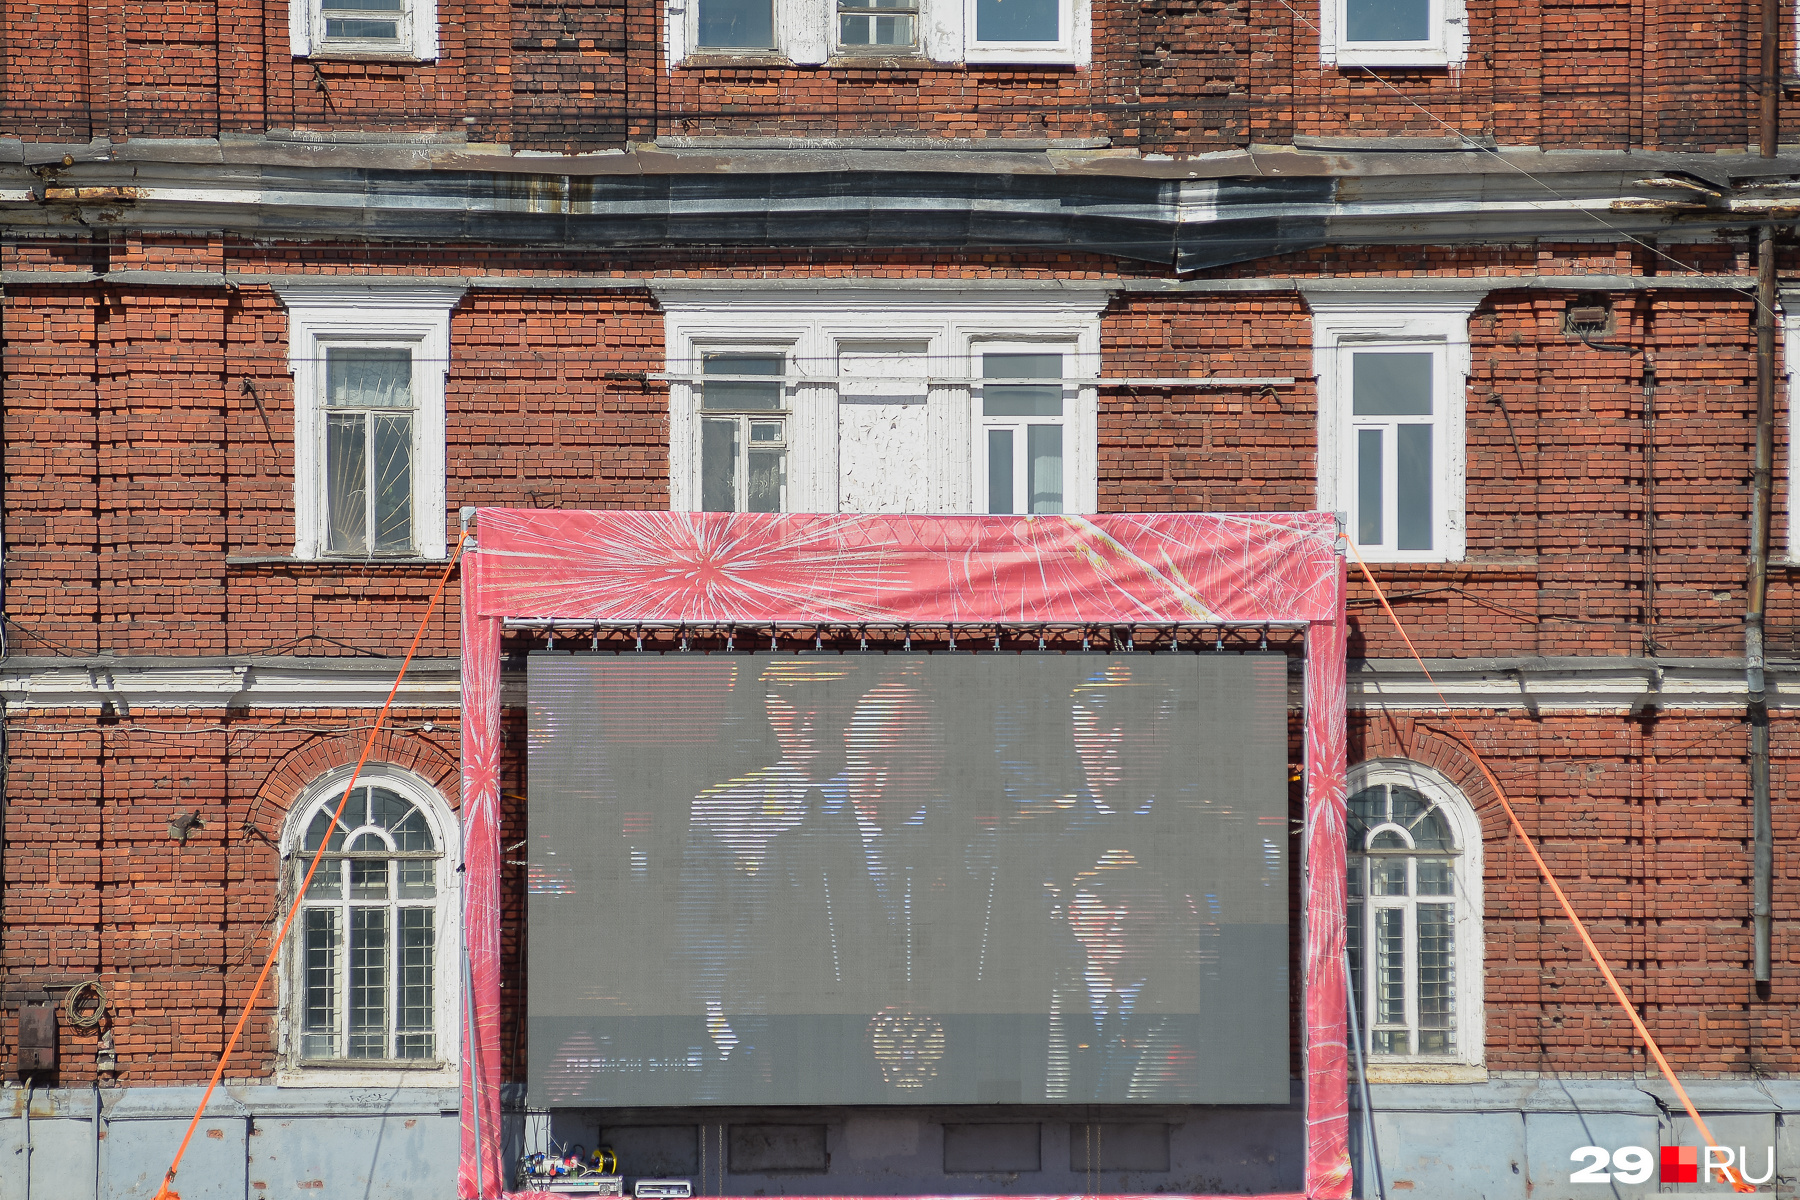 На экране — трансляция парада в Москве, для архангелородцев прозвучала <a href="https://29.ru/text/politics/2022/05/09/71317160/" class="_" target="_blank">речь президента Владимира Путина</a>